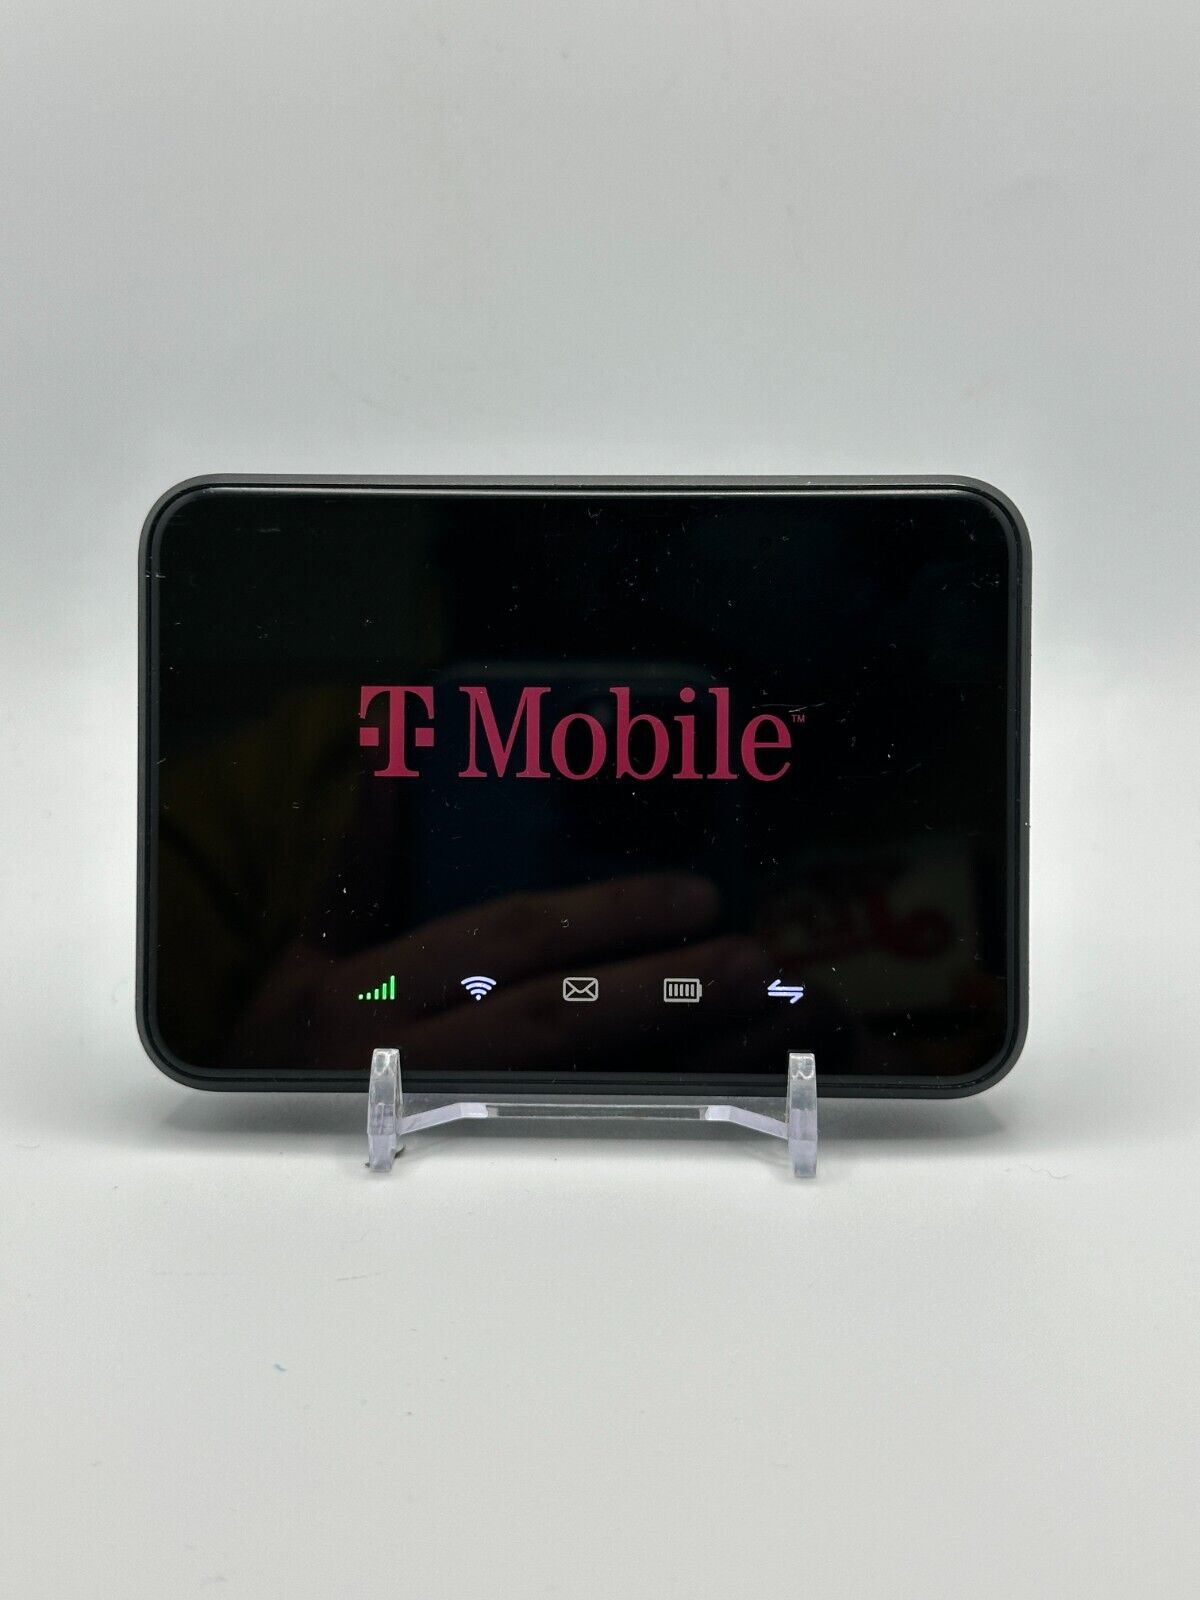 T-Mobile TMOHS1 Portable Wifi Hotspot Modem - Black - T-Mobile - WORKS GREAT